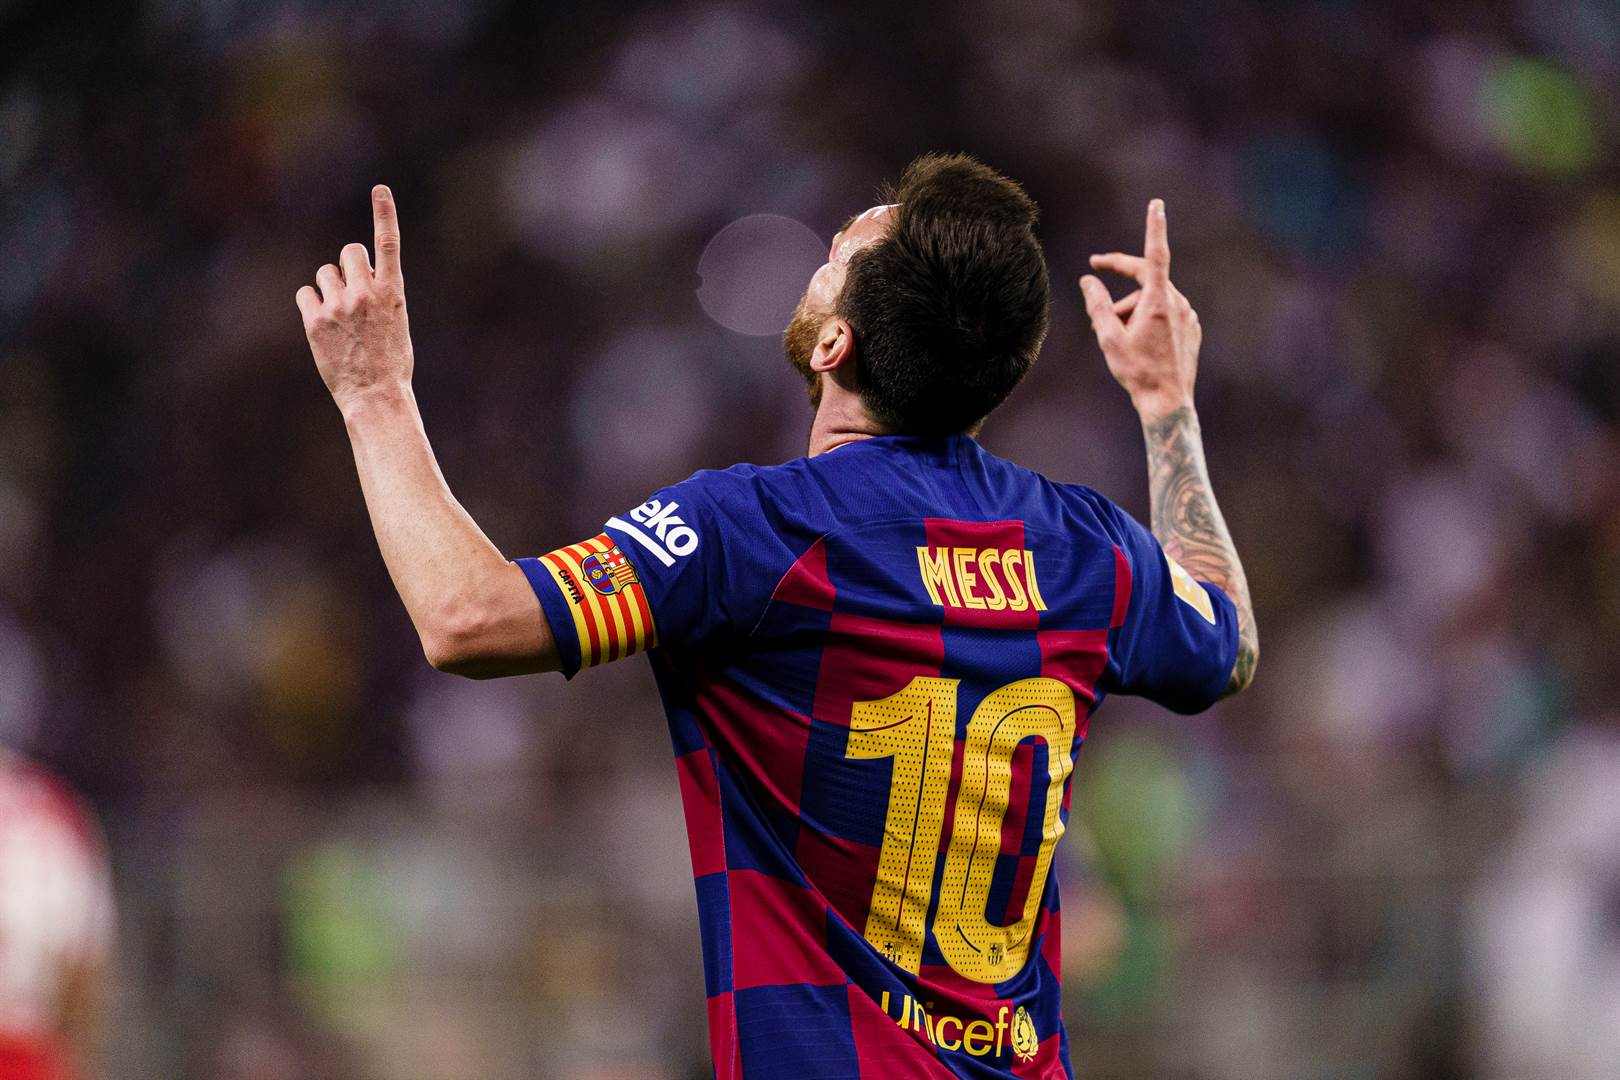 7. Lionel Messi (FC Barcelona) - 14 goals